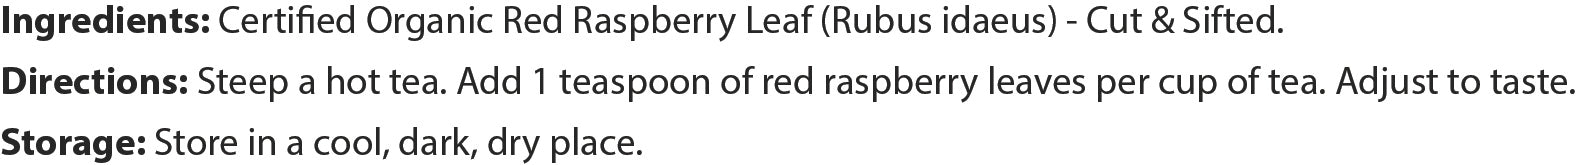 Raspberry Leaf - Cut & Sifted